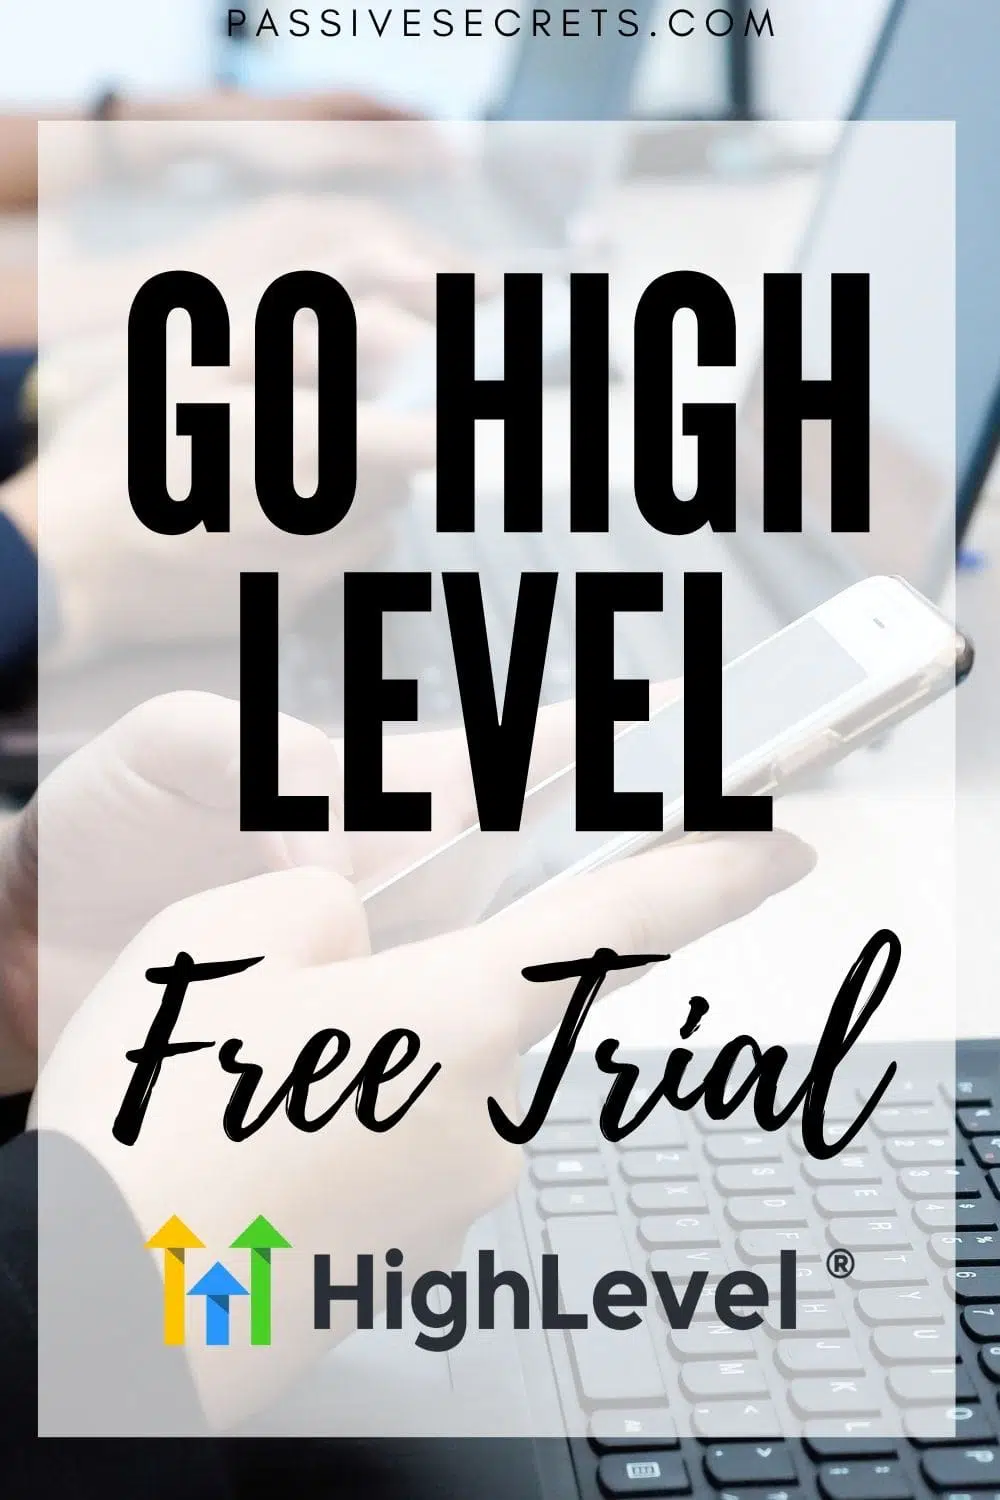 gohighlevel free trial passive secrets